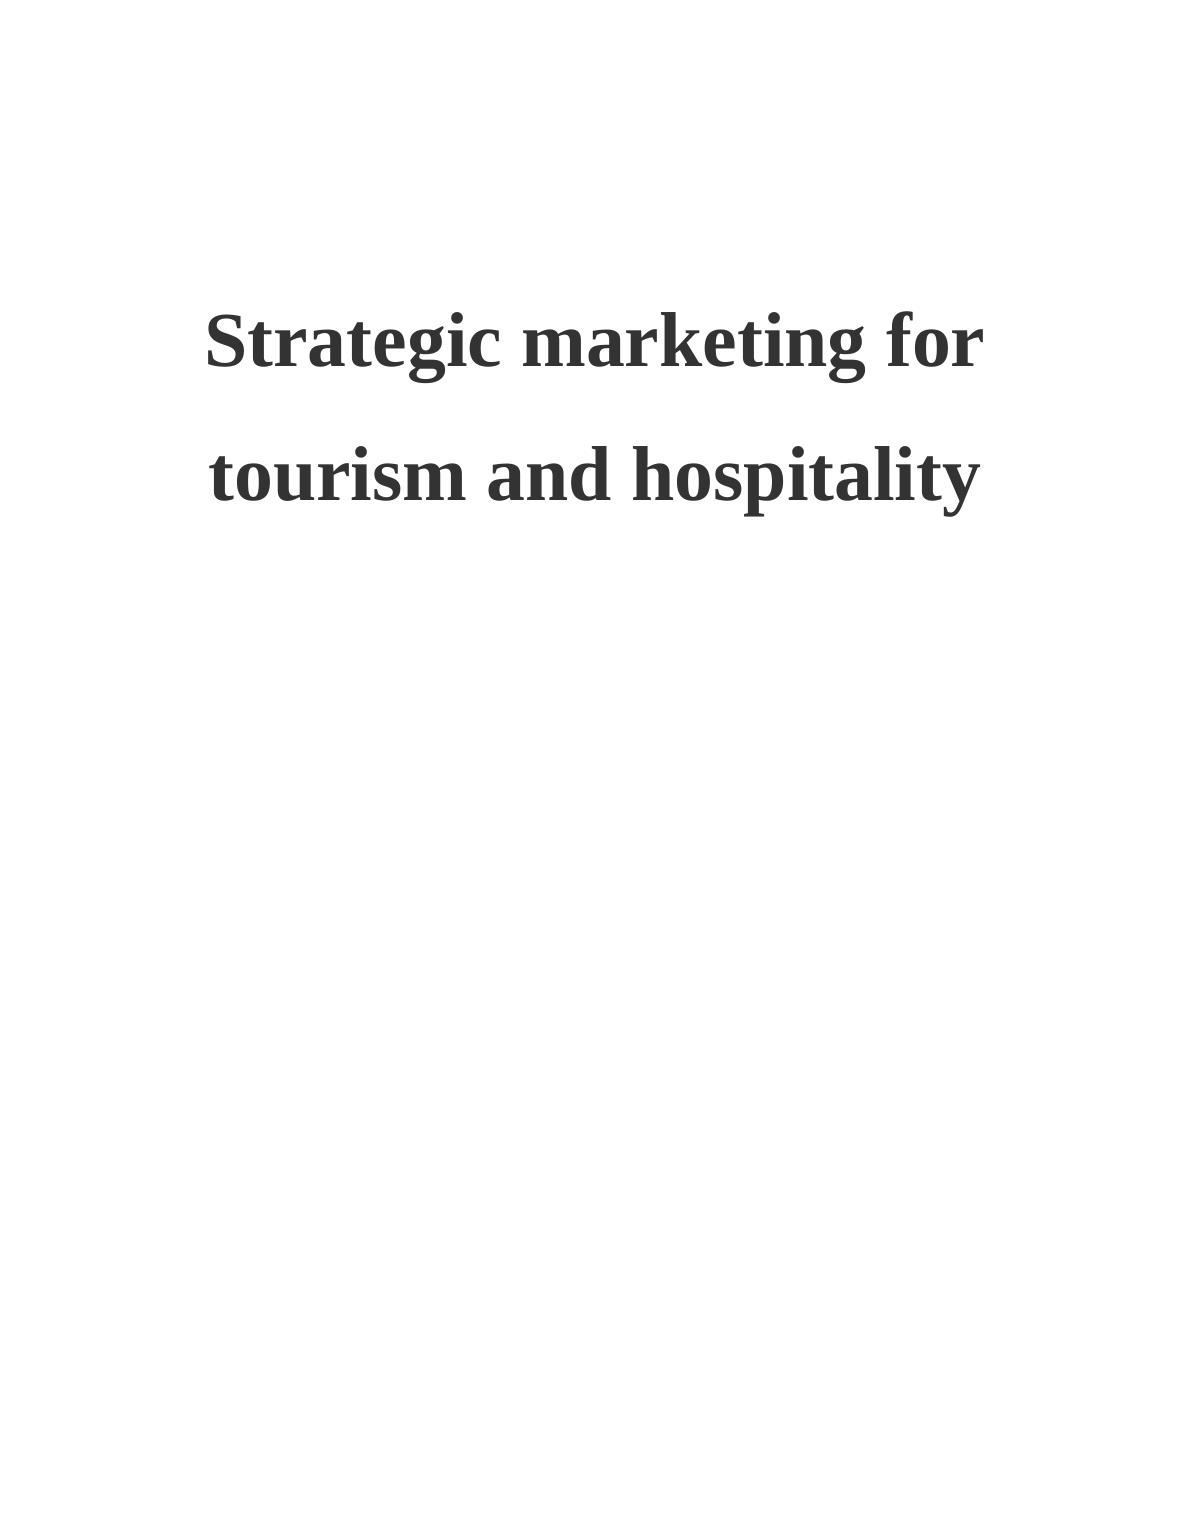 Strategic Marketing for Tourism and Hospitality_1